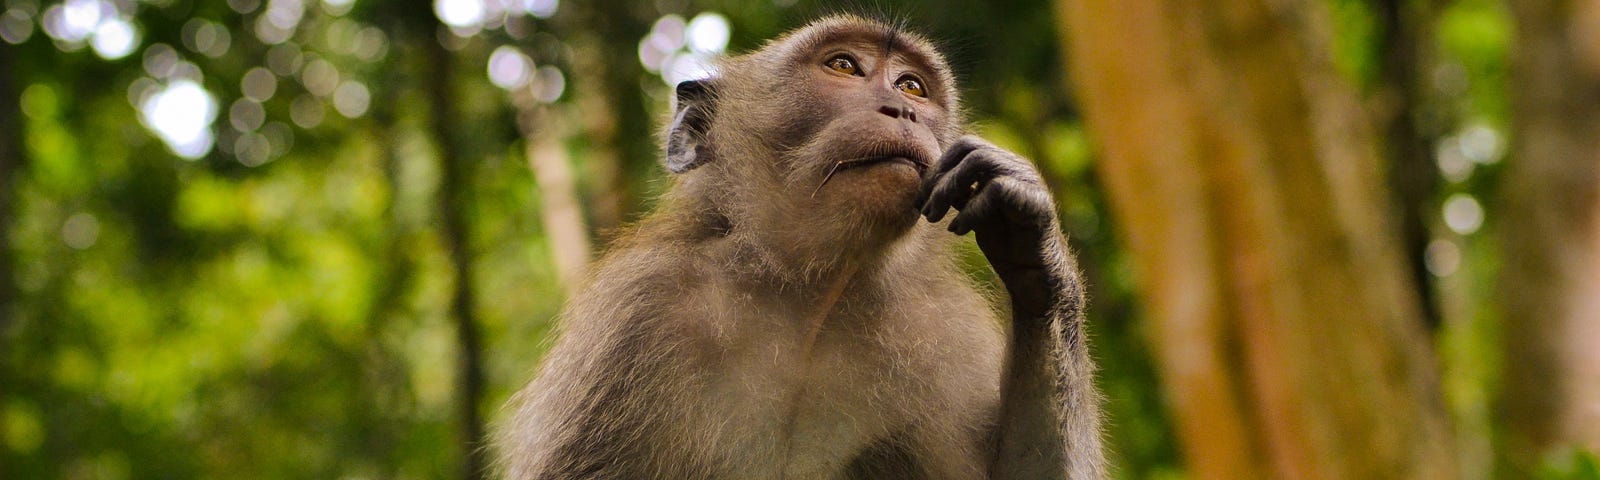 A monkey thinking